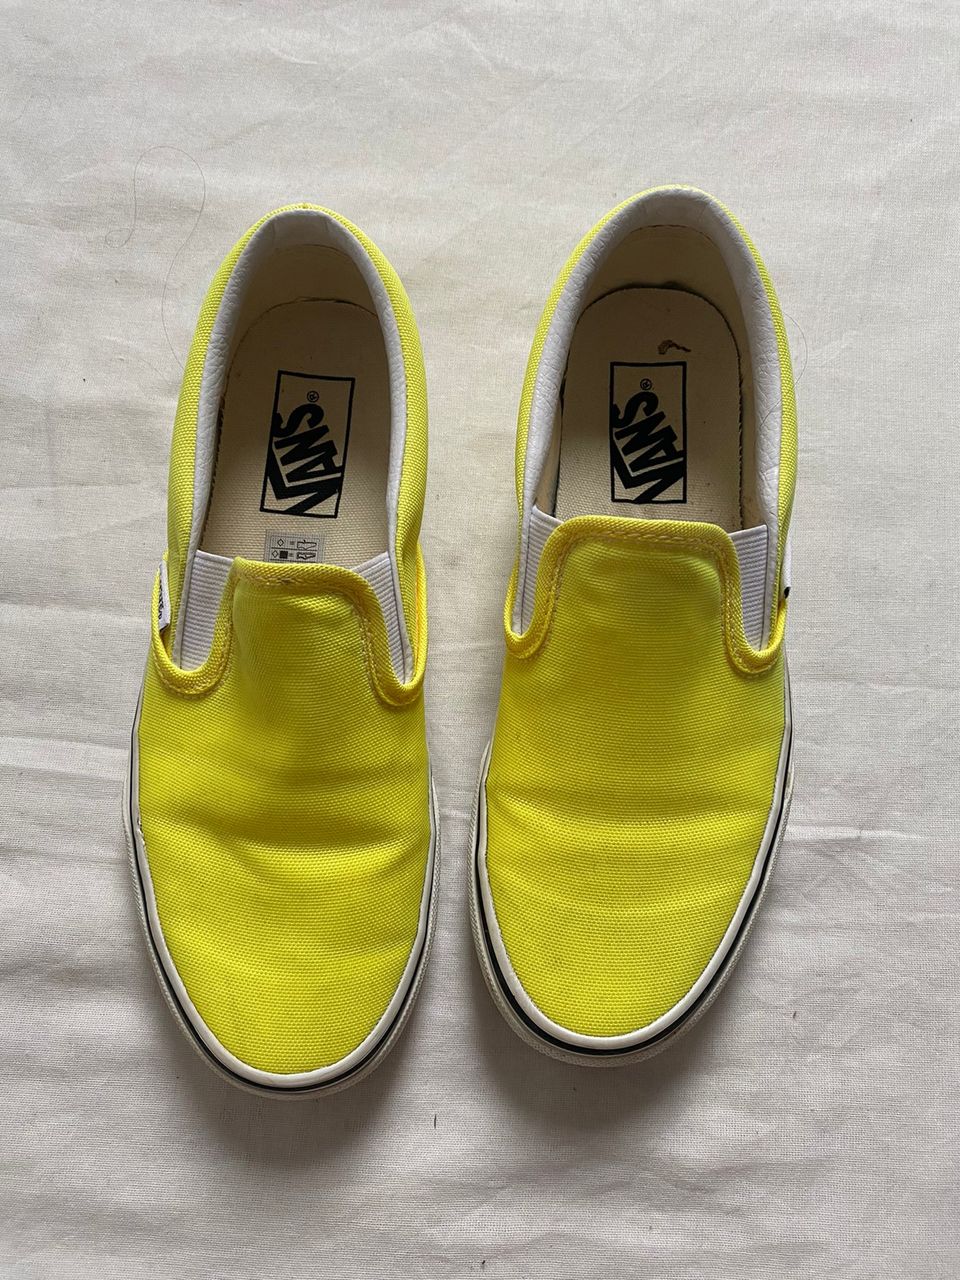 Keltaiset Vans -kengät 36,5